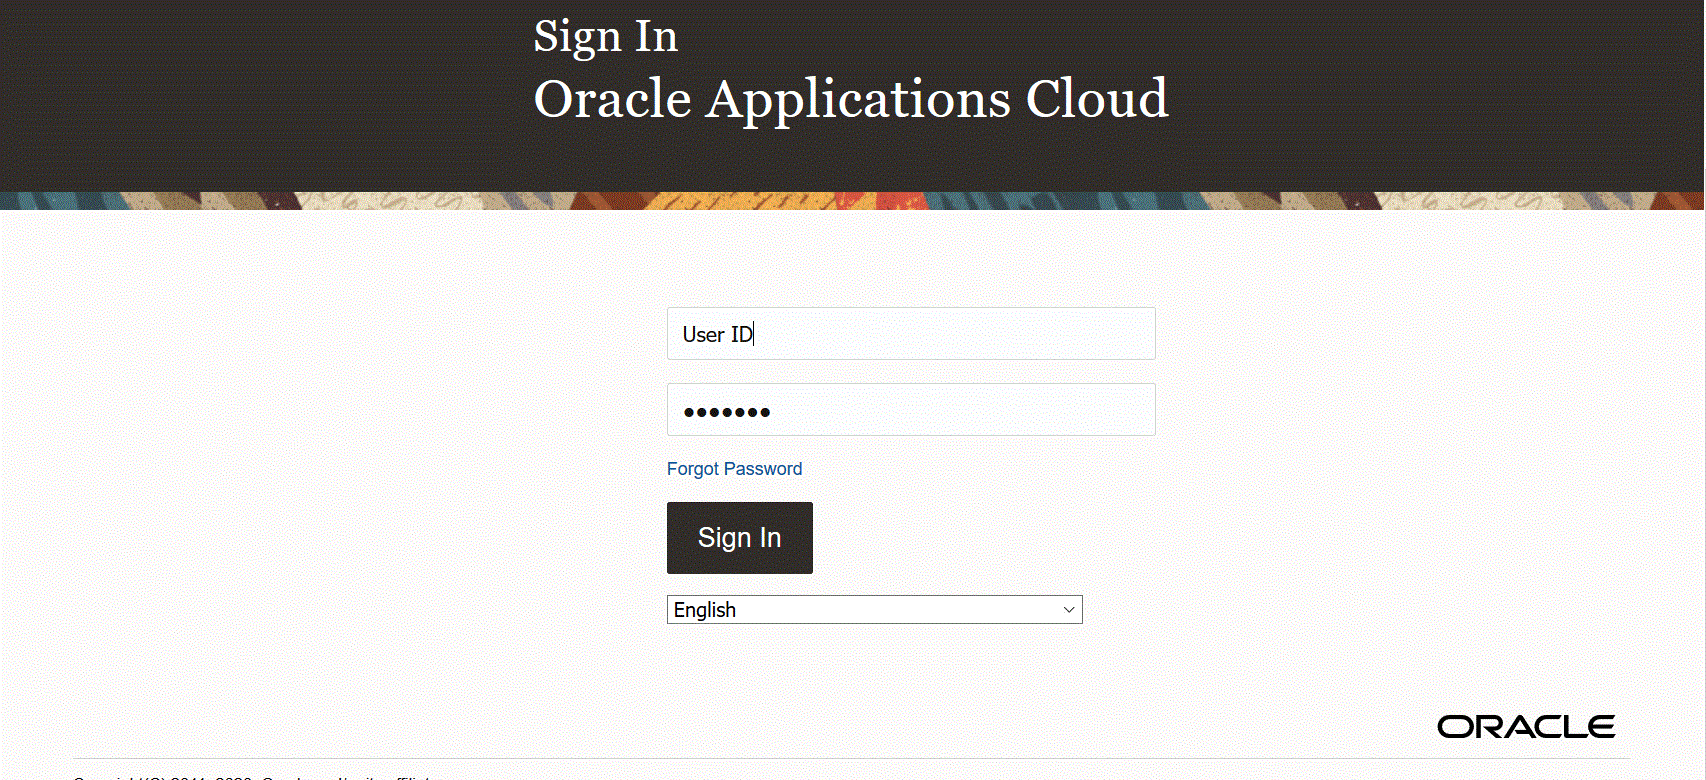 En la imagen se muestra Oracle Applications Cloud